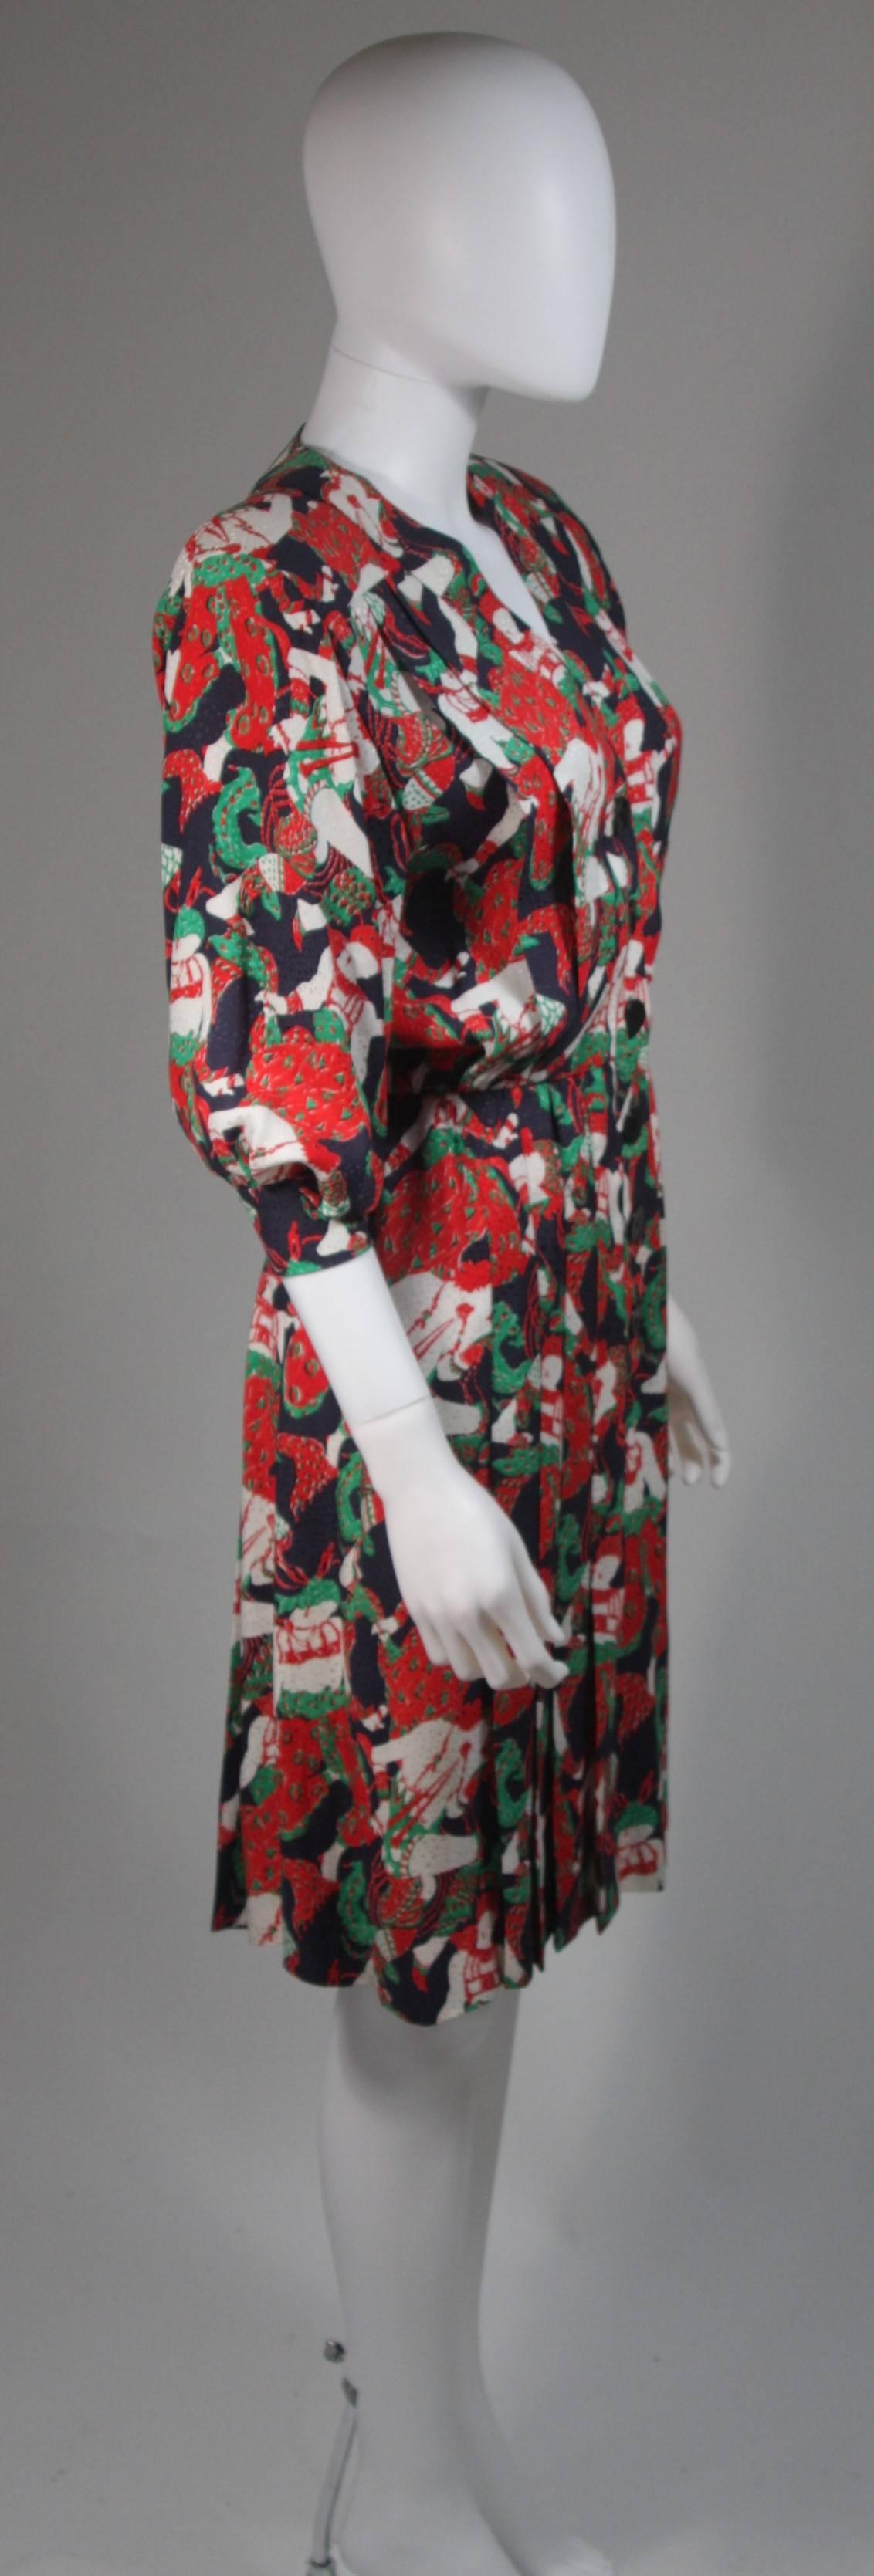 Yves Saint Laurent Colorful Pleated Silk Dress Size 36 2